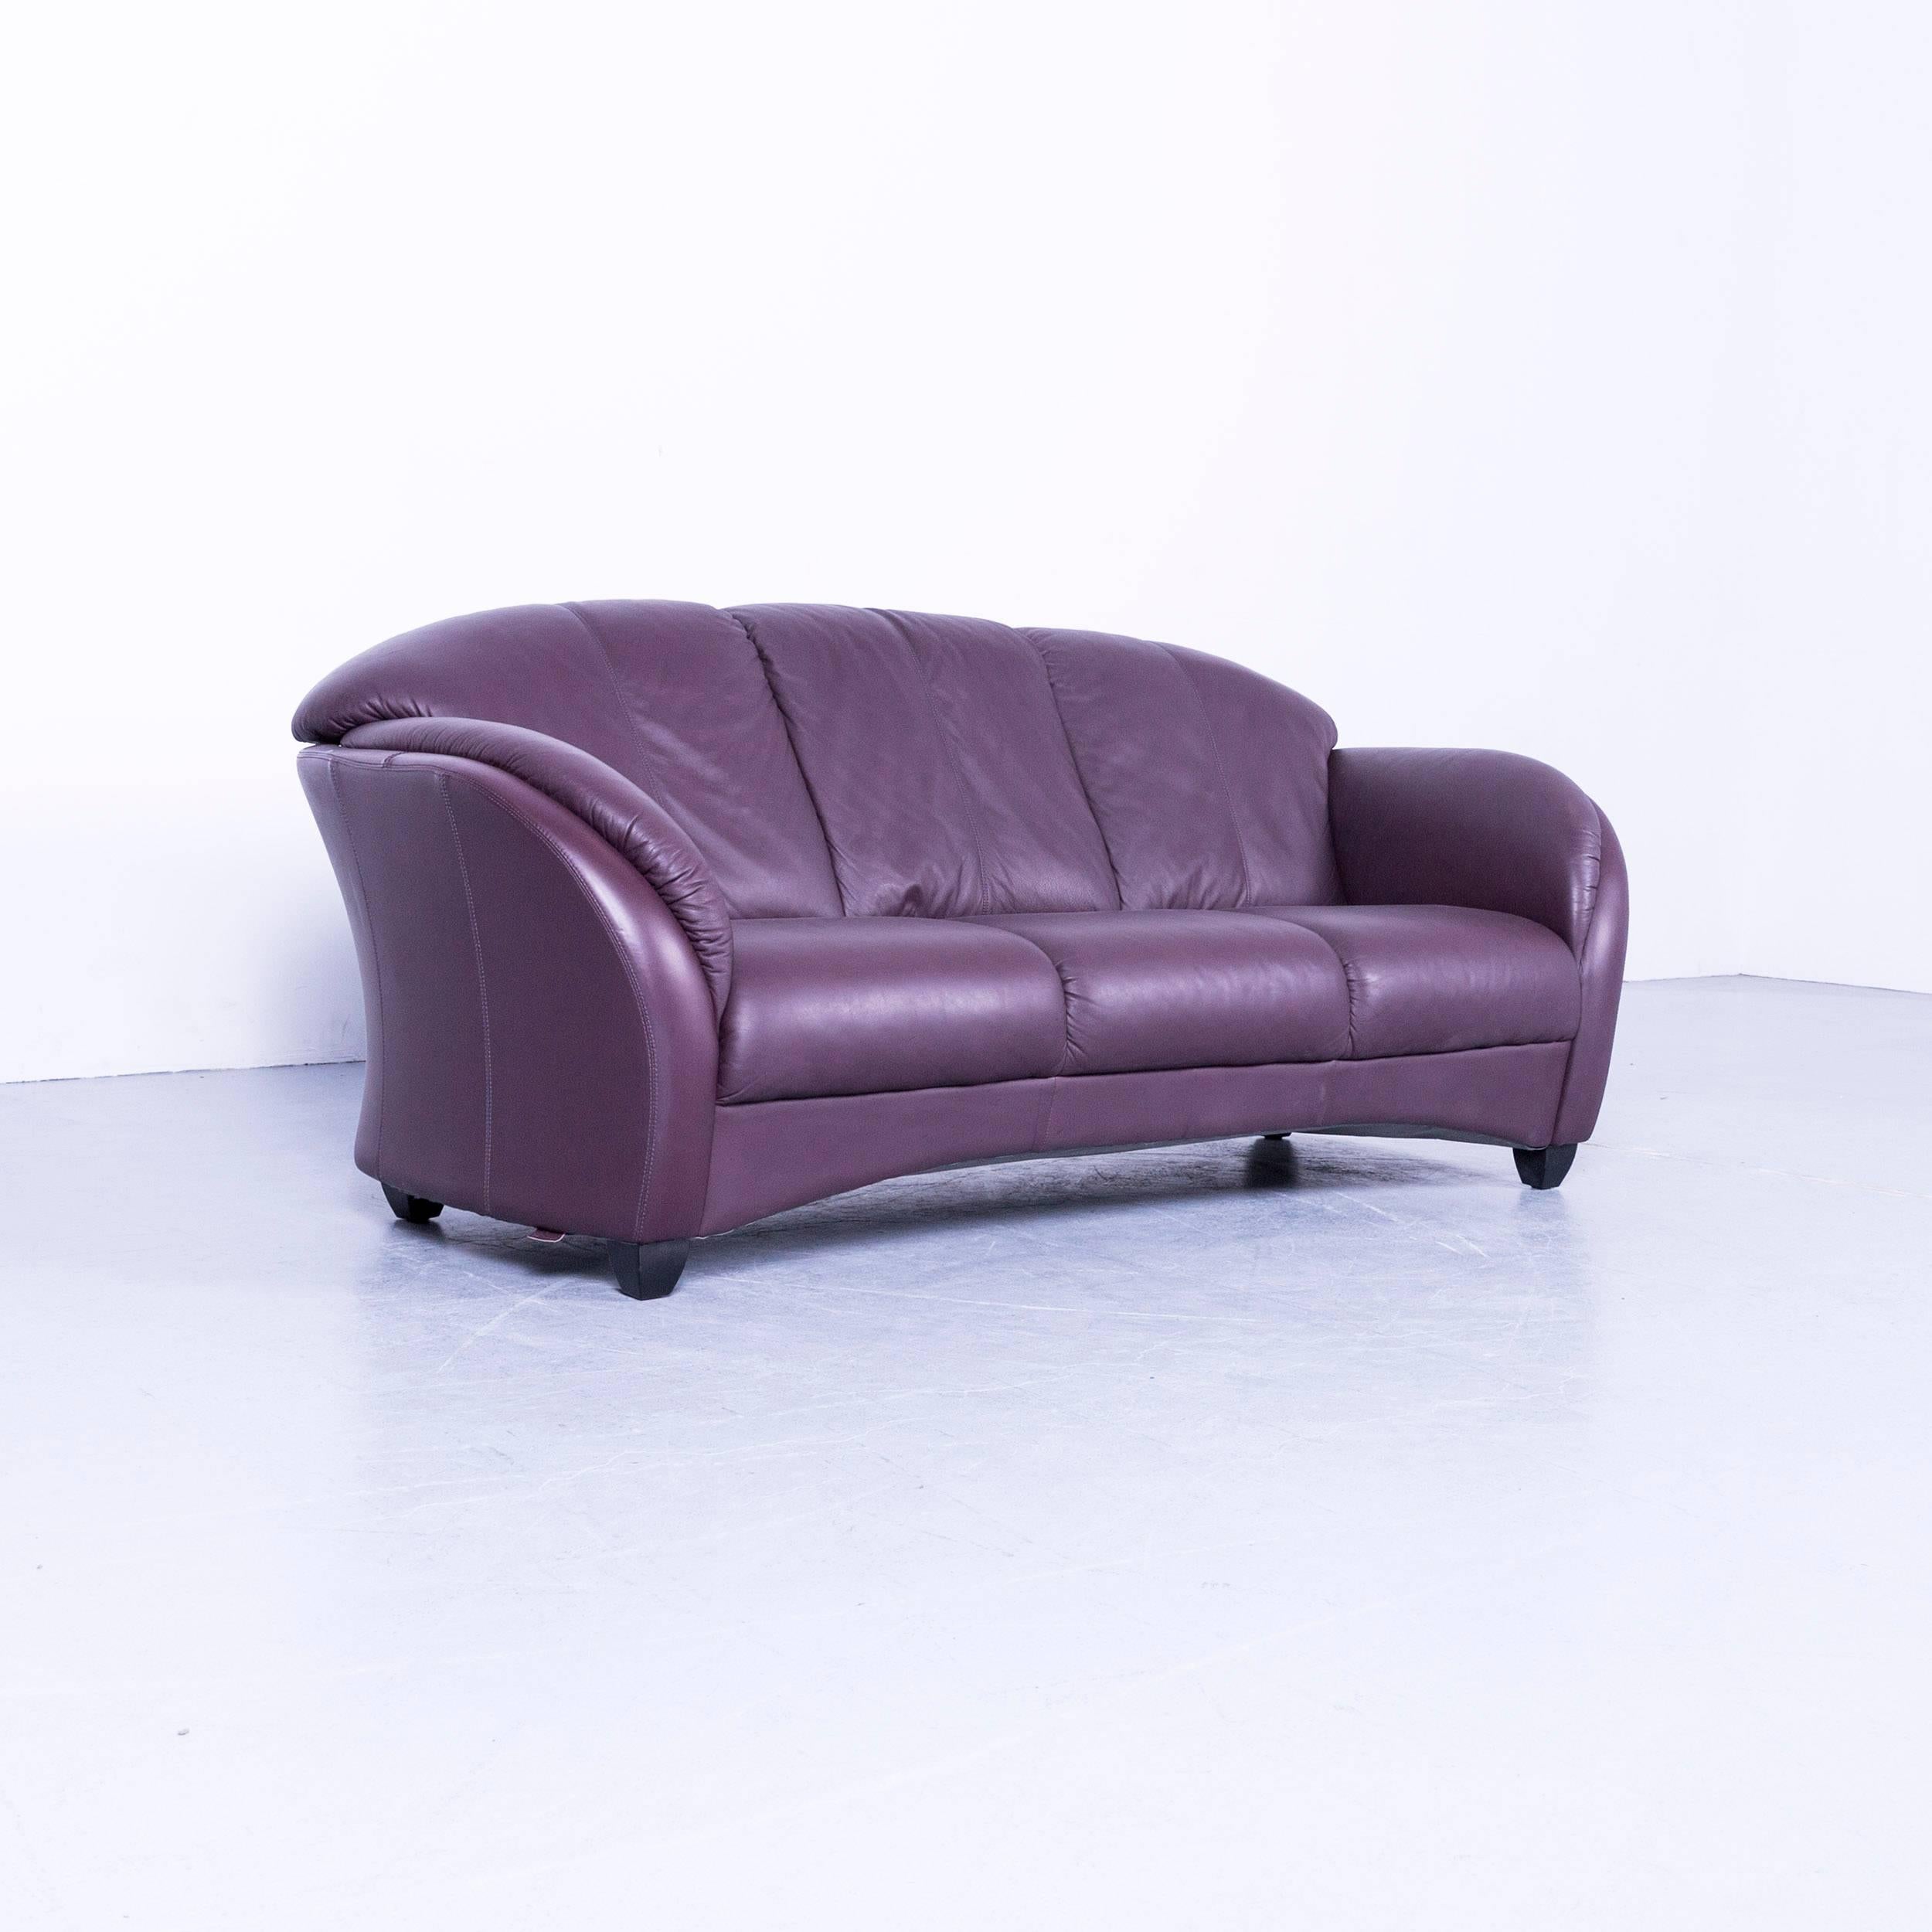 Himolla designer sofa leather purple, in a minimalistic and modern design, made for pure comfort.